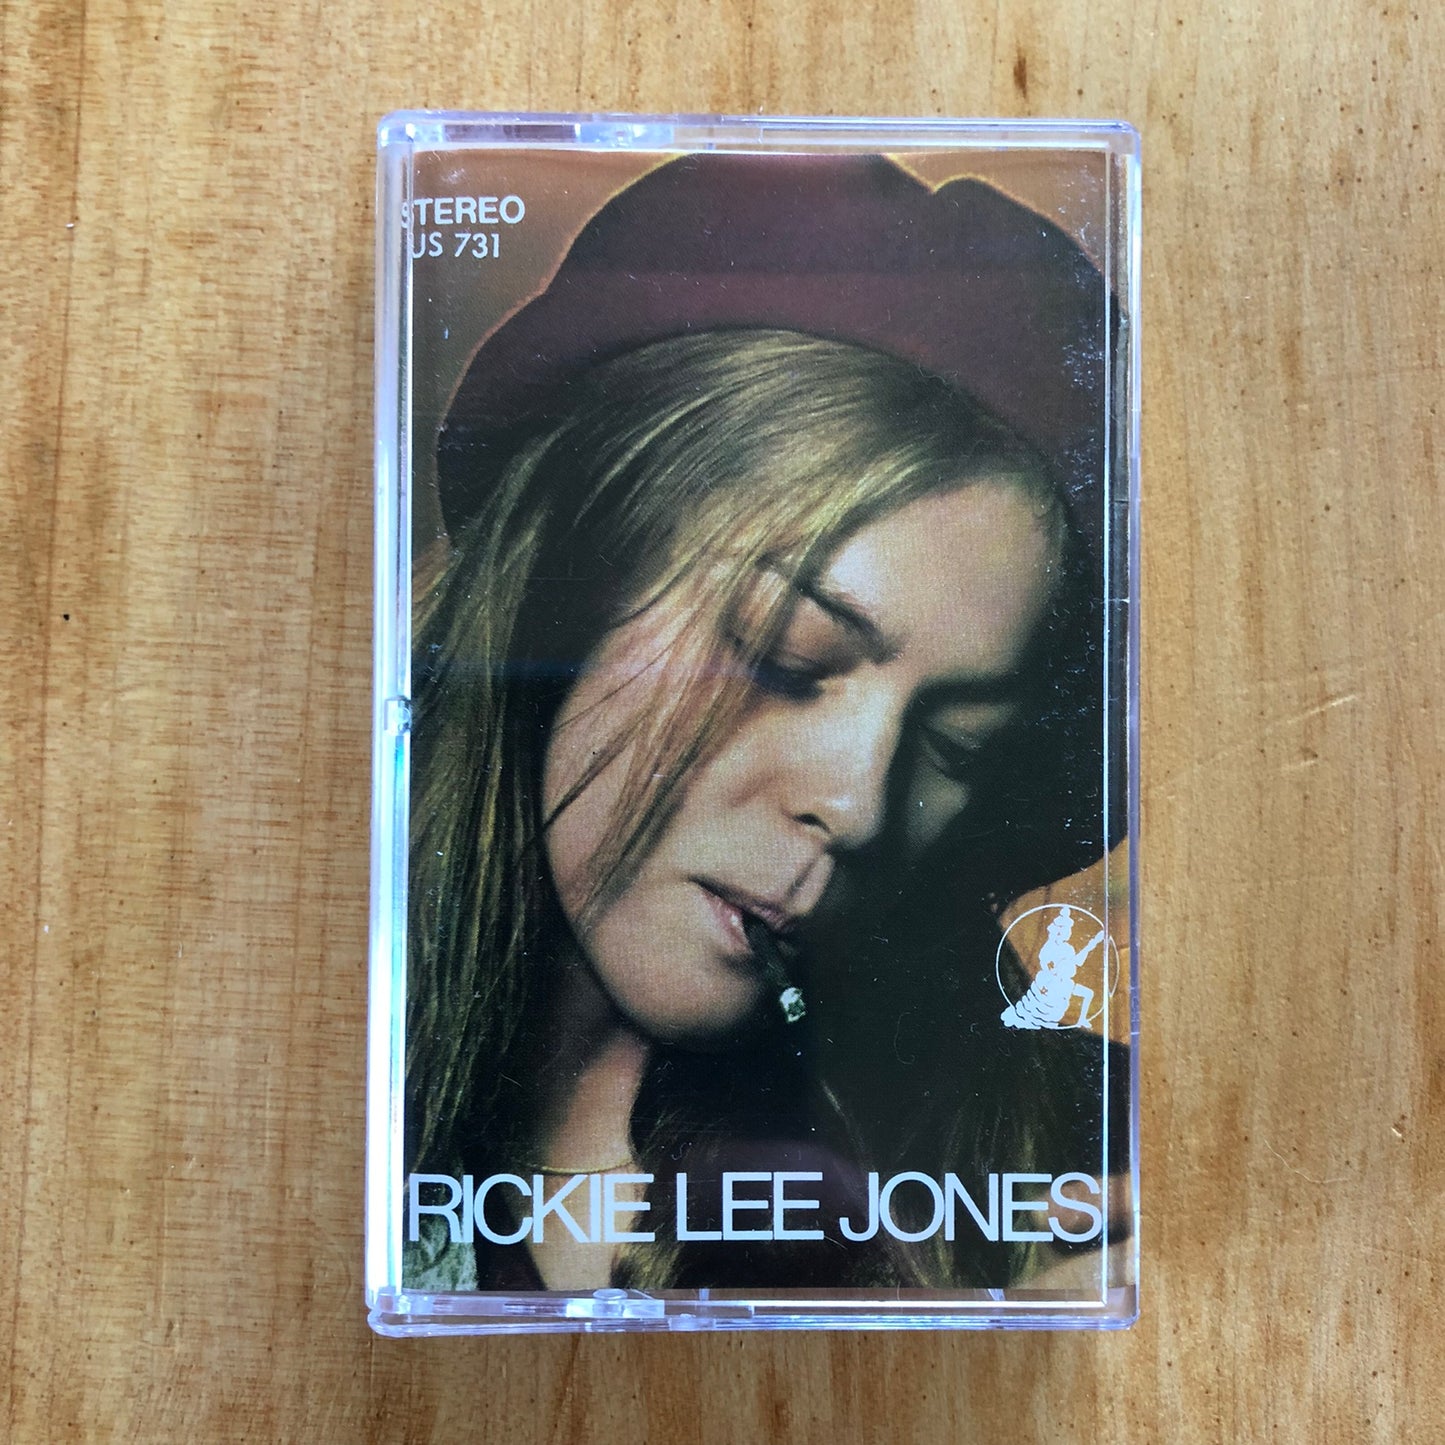 Rickie Lee Jones - self-titled (cassette)